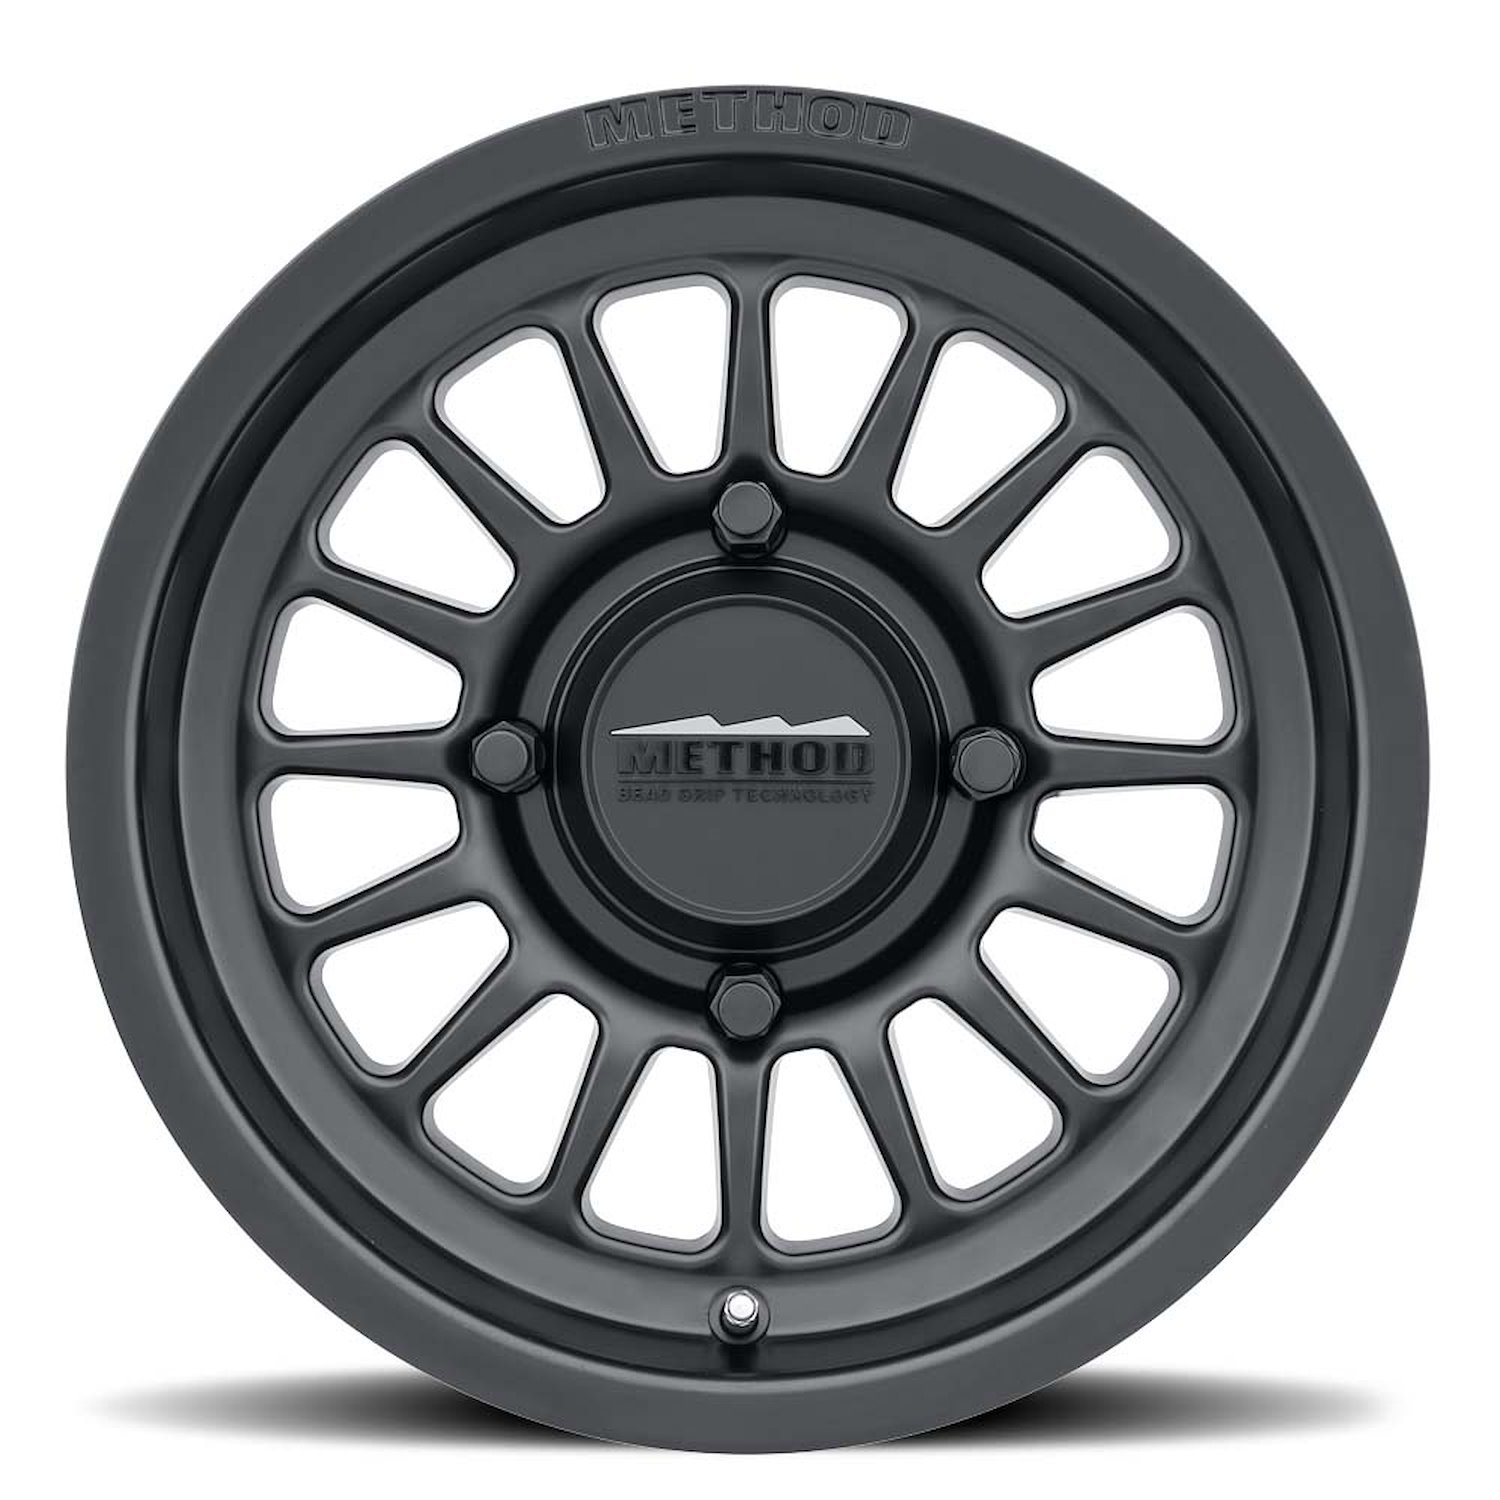 MR41157046543 UTV MR411 Bead Grip Wheel [Size: 15" x 7"] Matte Black